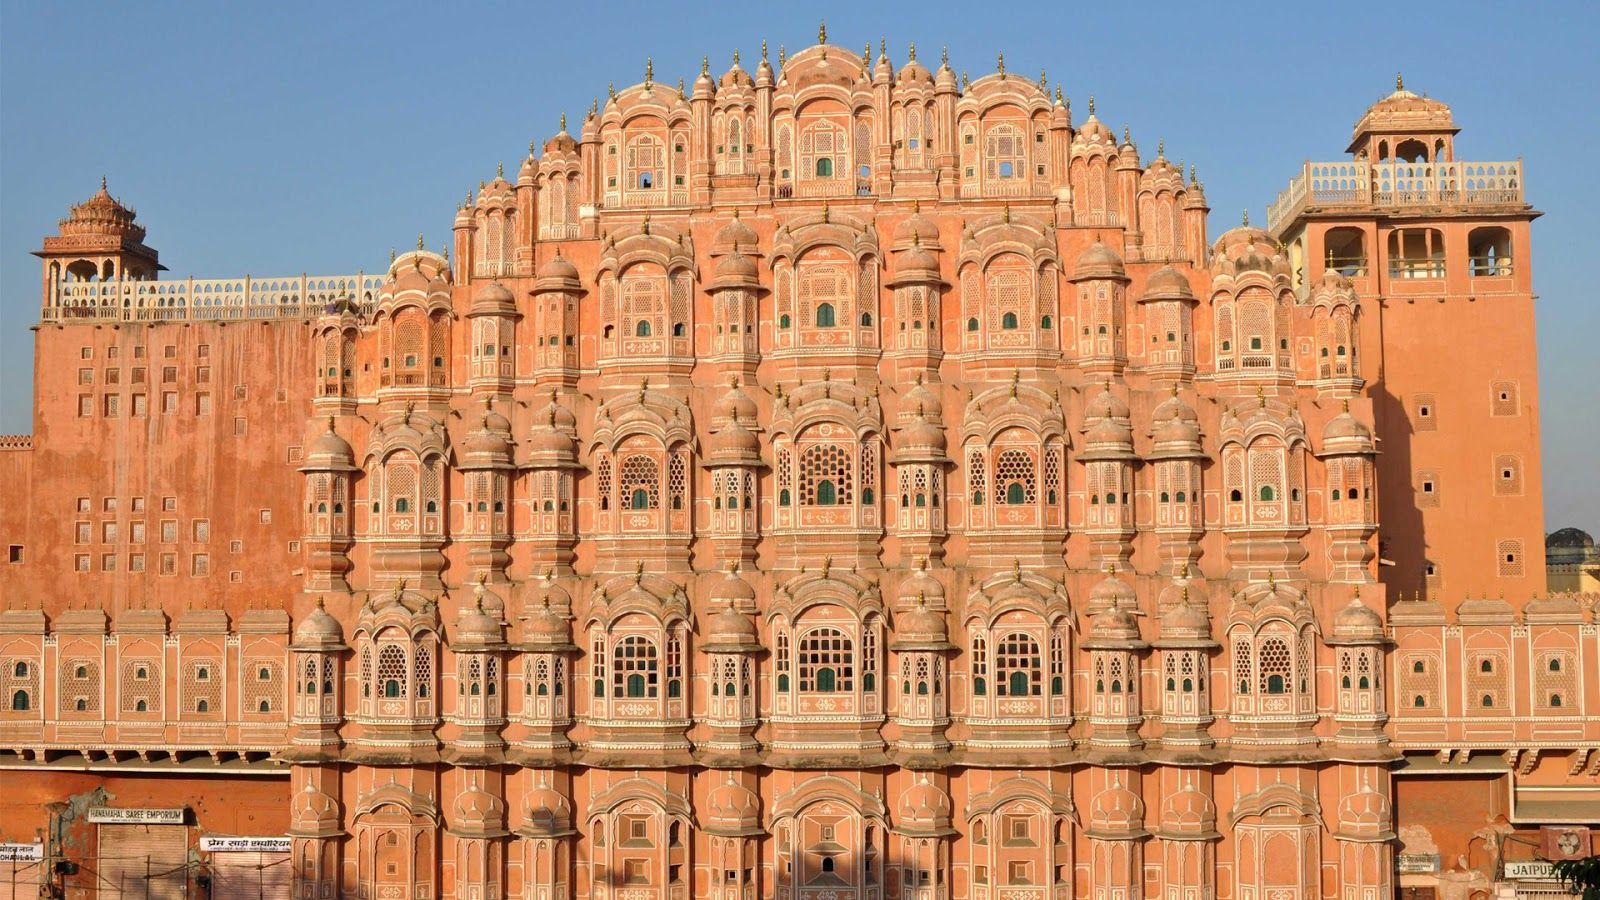 Rajasthan Desktop Wallpapers - Top Free Rajasthan Desktop Backgrounds ...